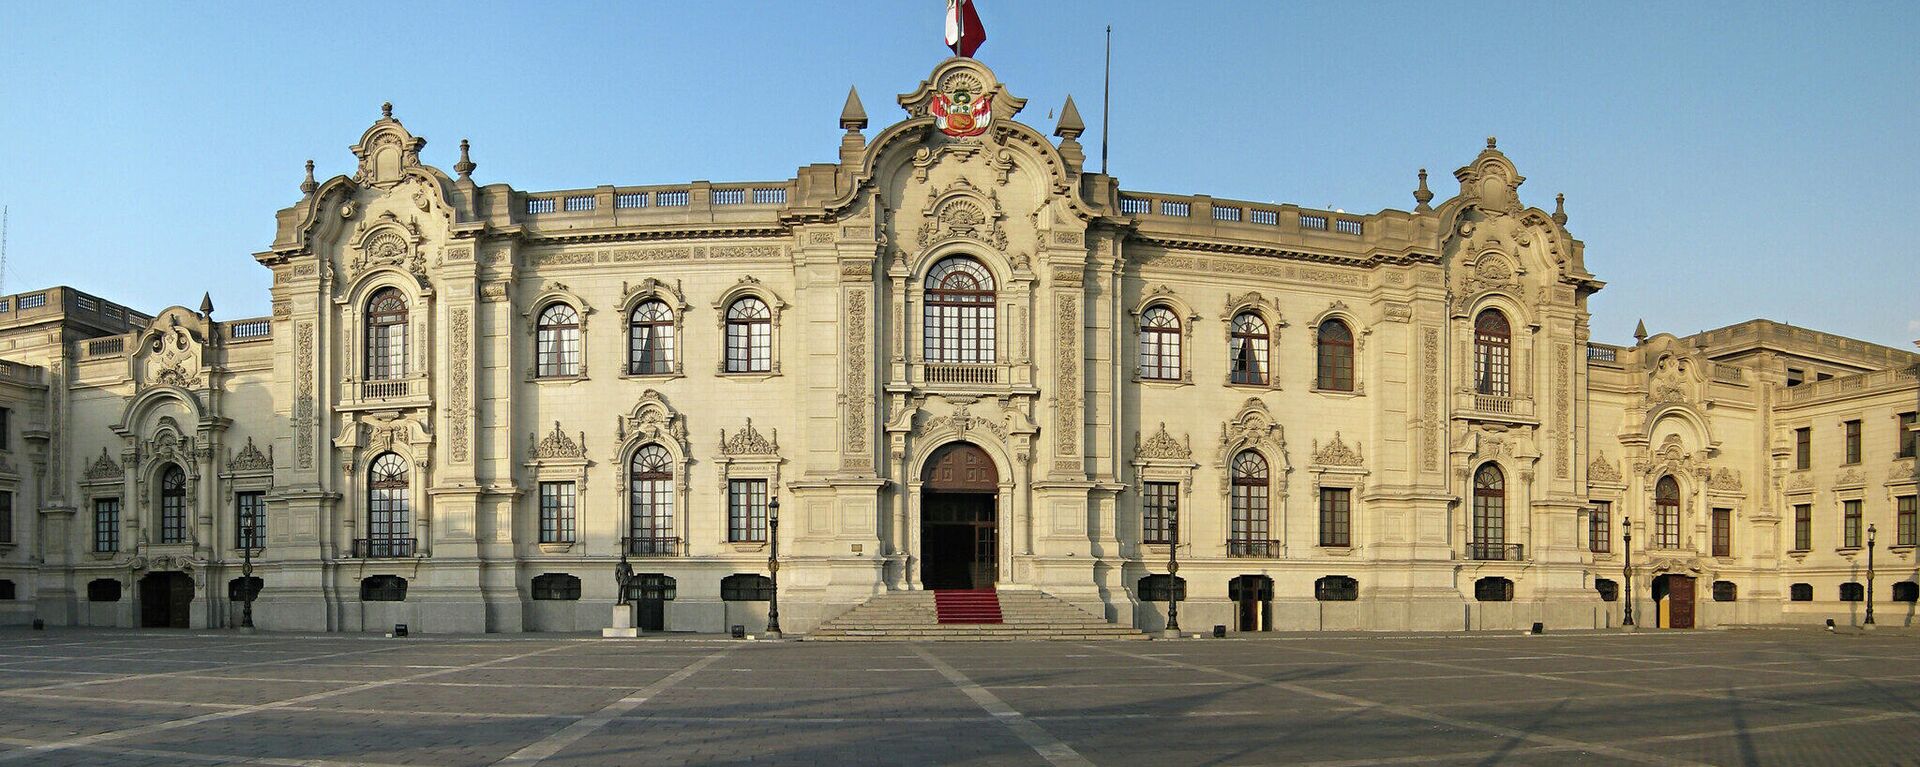 Palacio de Gobierno de Perú (Casa de Pizarro) - Sputnik Mundo, 1920, 03.11.2021